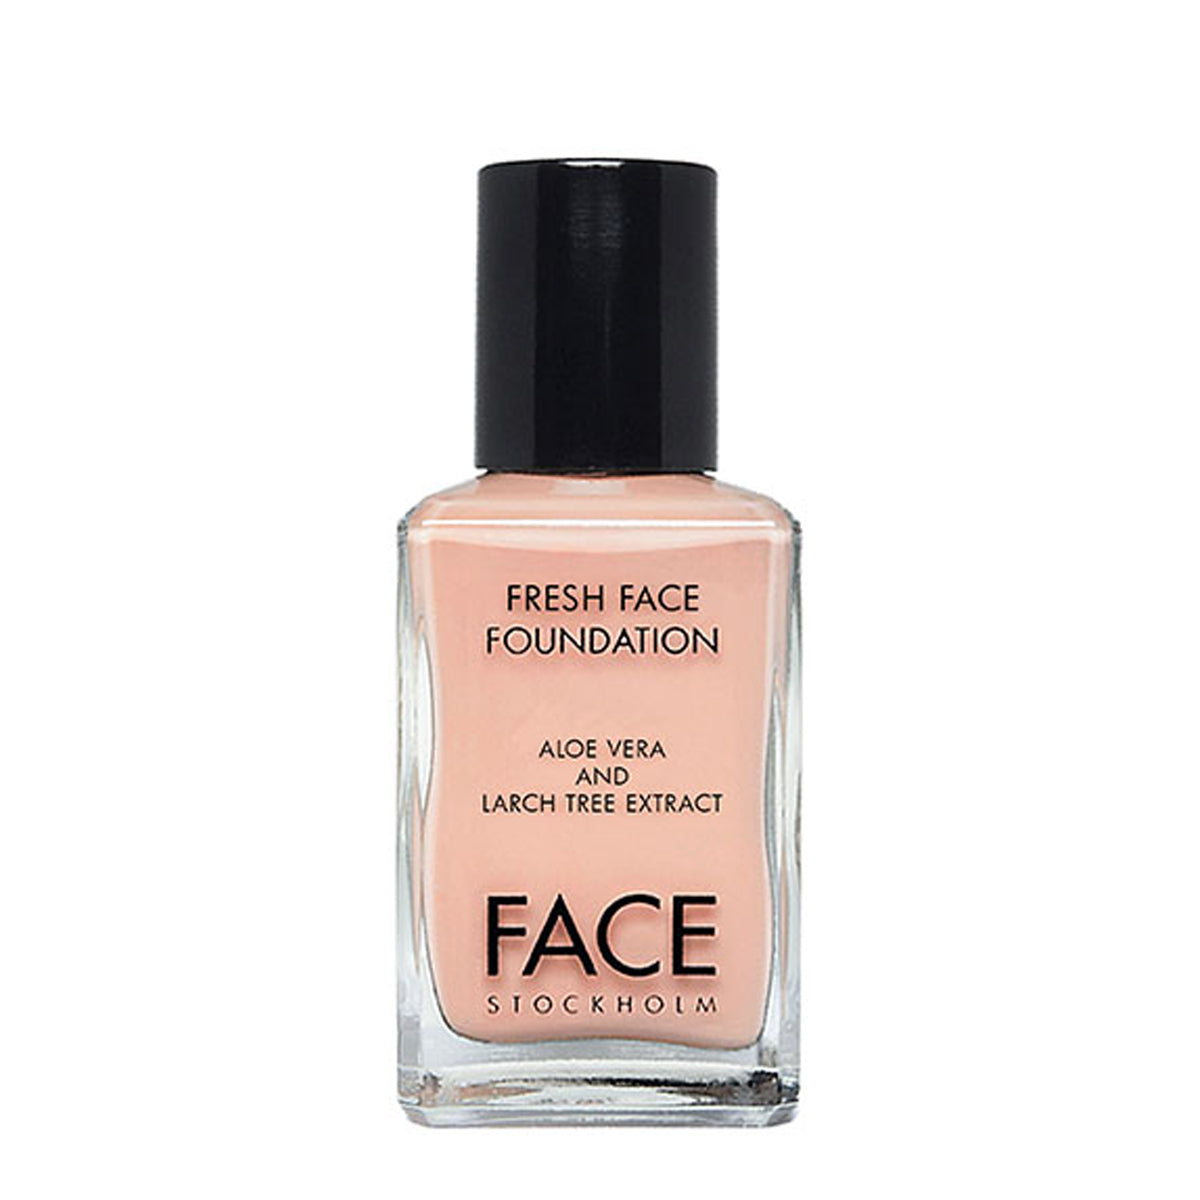 Fresh Face Foundation - Season